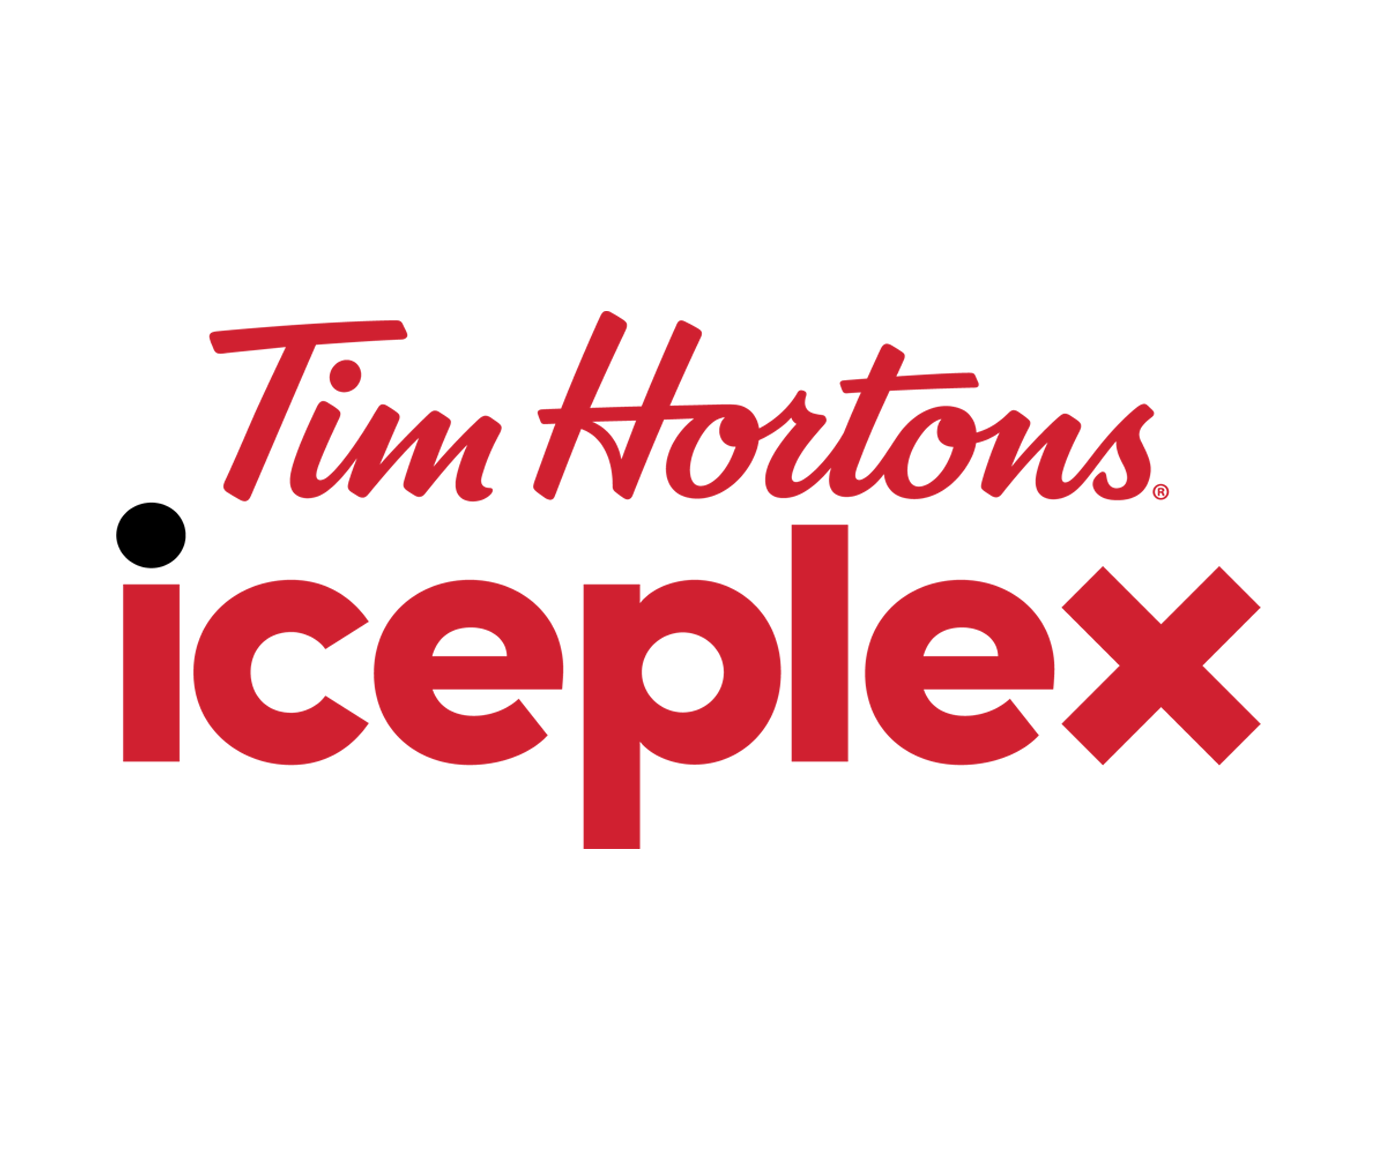 Tim hortons iceplex.png